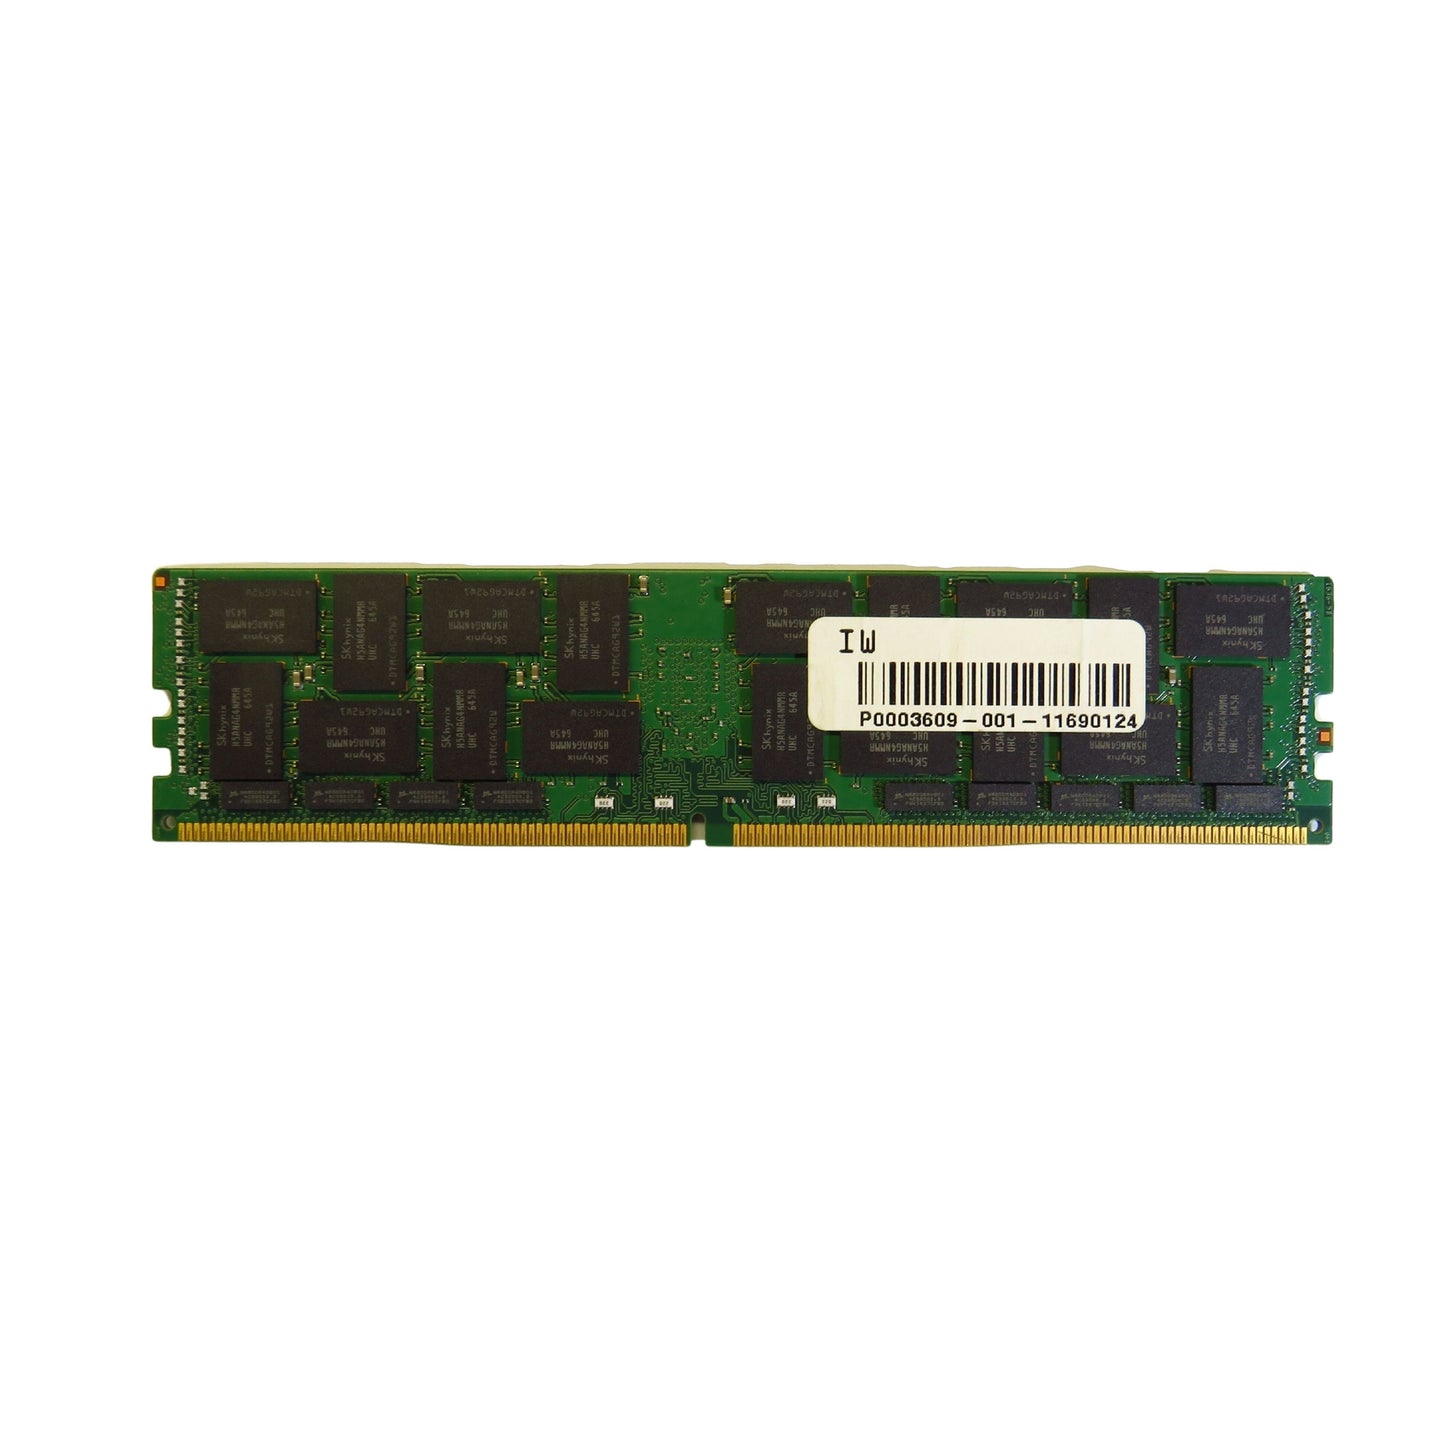 HPE P0003609-001 64GB 4DRx4 PC4-2400T 2400MHz LRDIMM Server Memory (Refurbished)